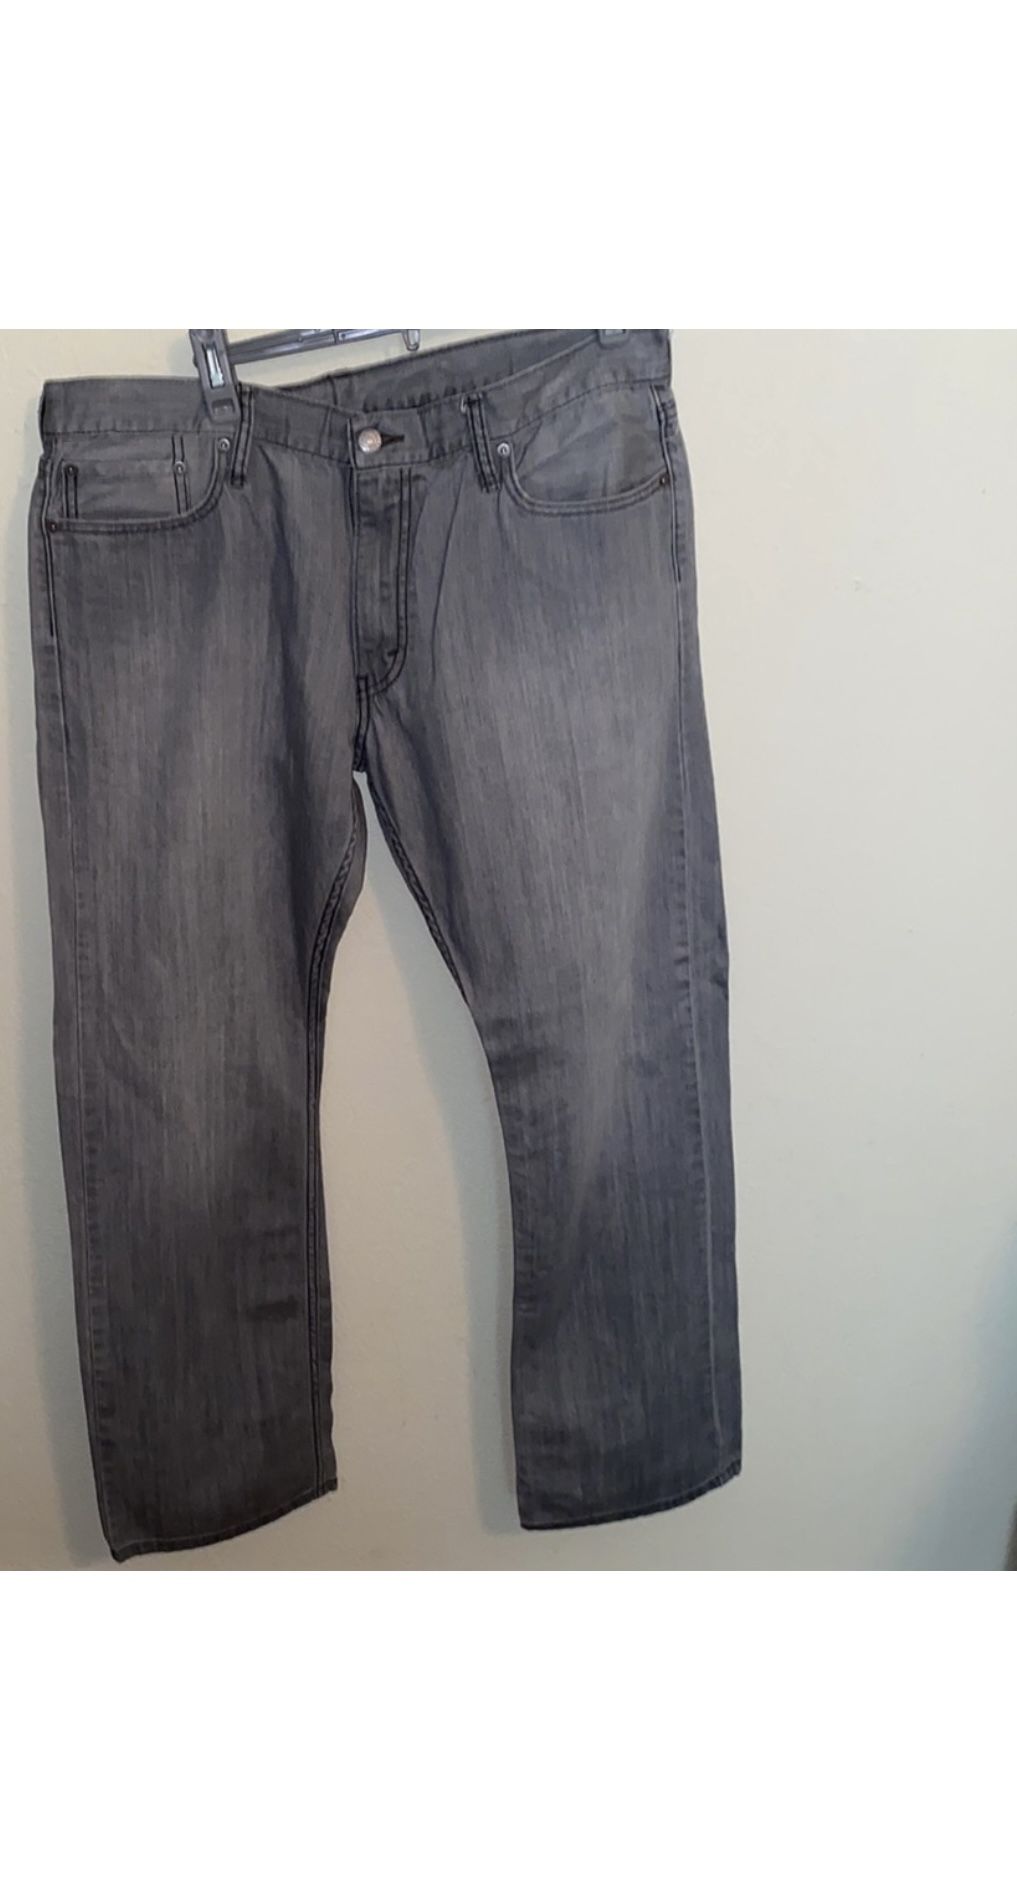 Levi’s Slim Straight 514 Jeans Sz 36x32